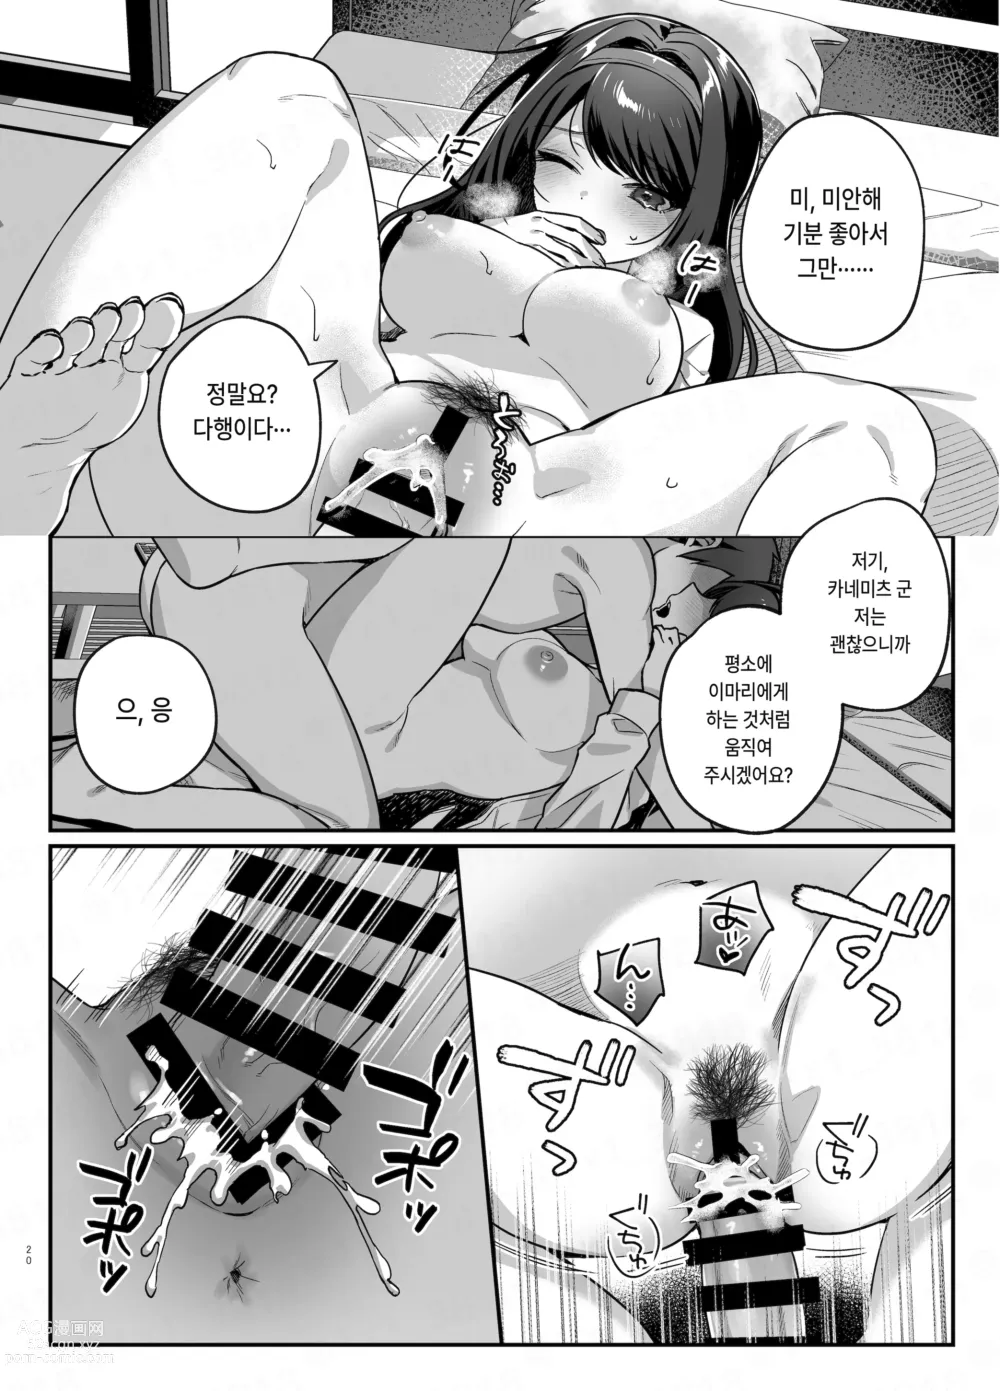 Page 19 of doujinshi 여친과 친구의 첫 경험